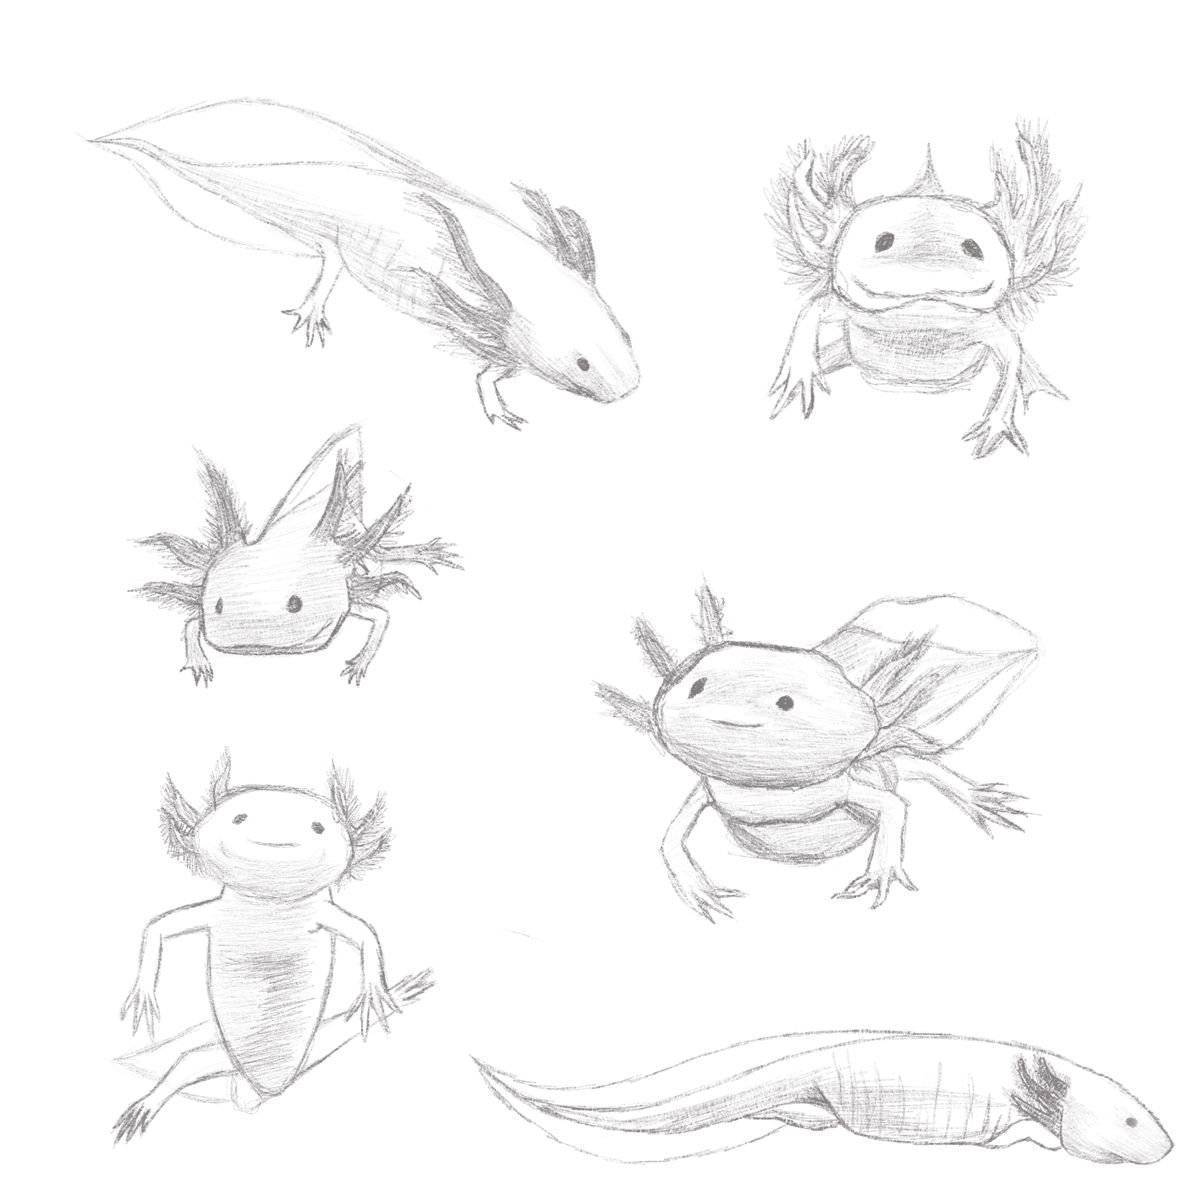 Humorous axolotl coloring book